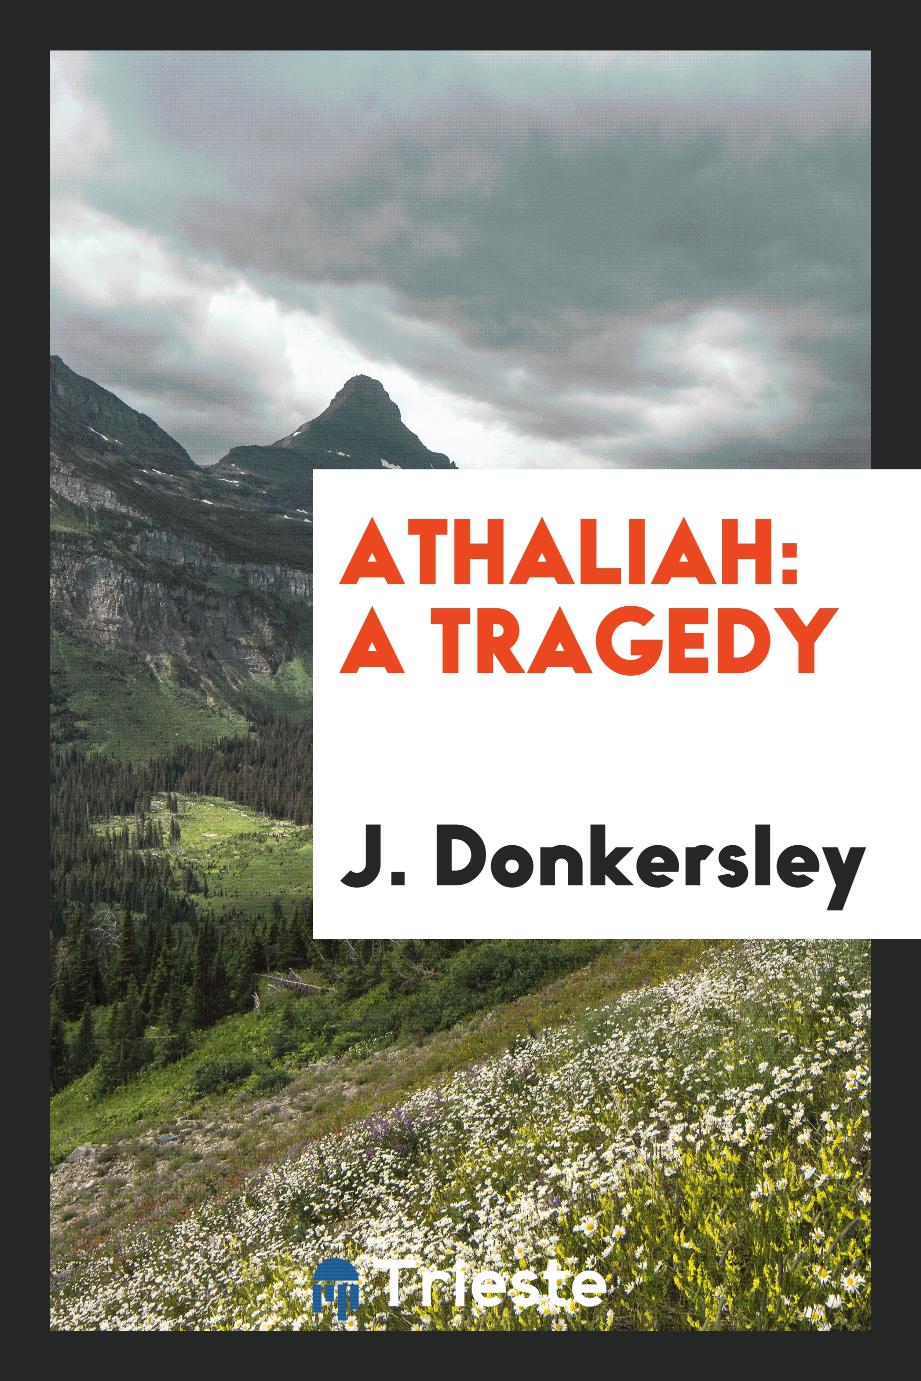 Athaliah: A Tragedy